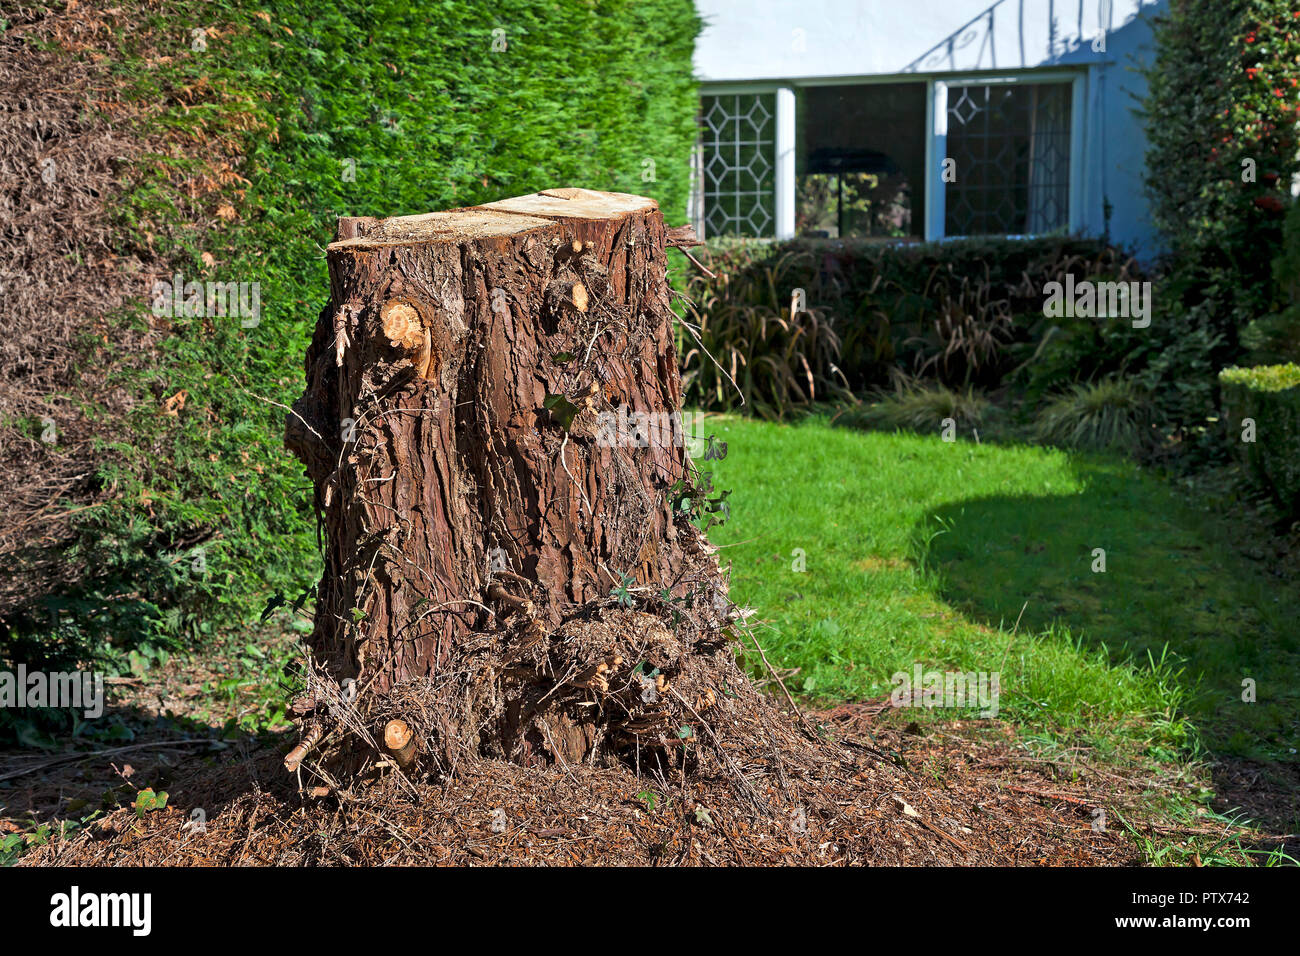 Conifer tree stump in garden Stock Photo